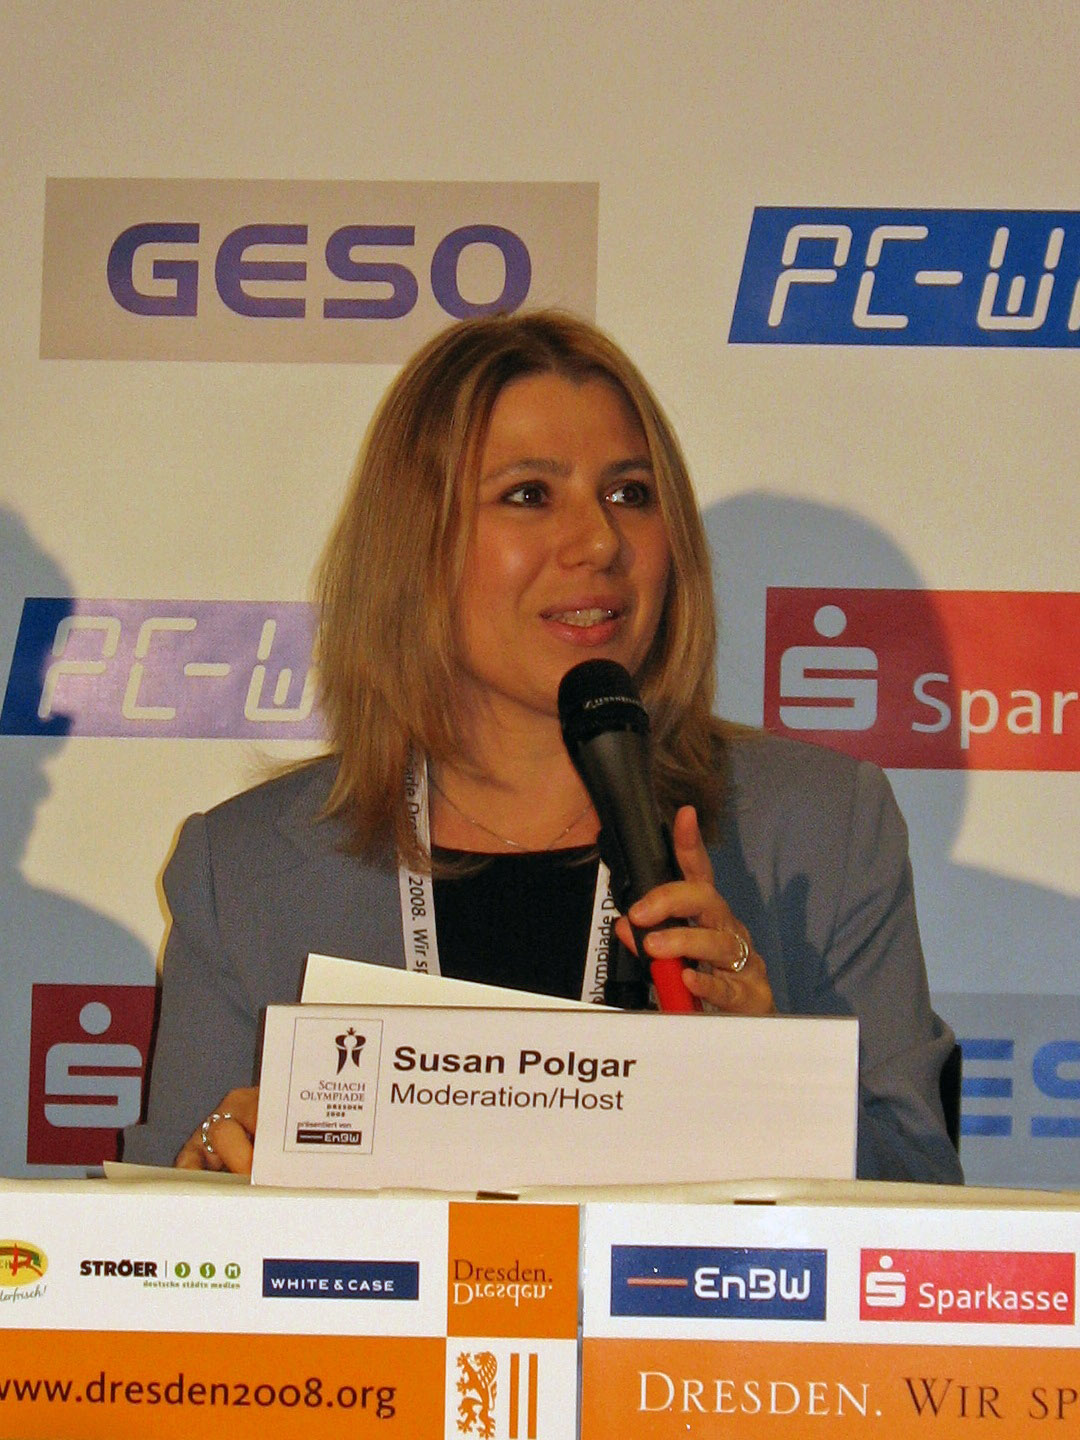 Susan Polgar Global Chess Daily News and Information